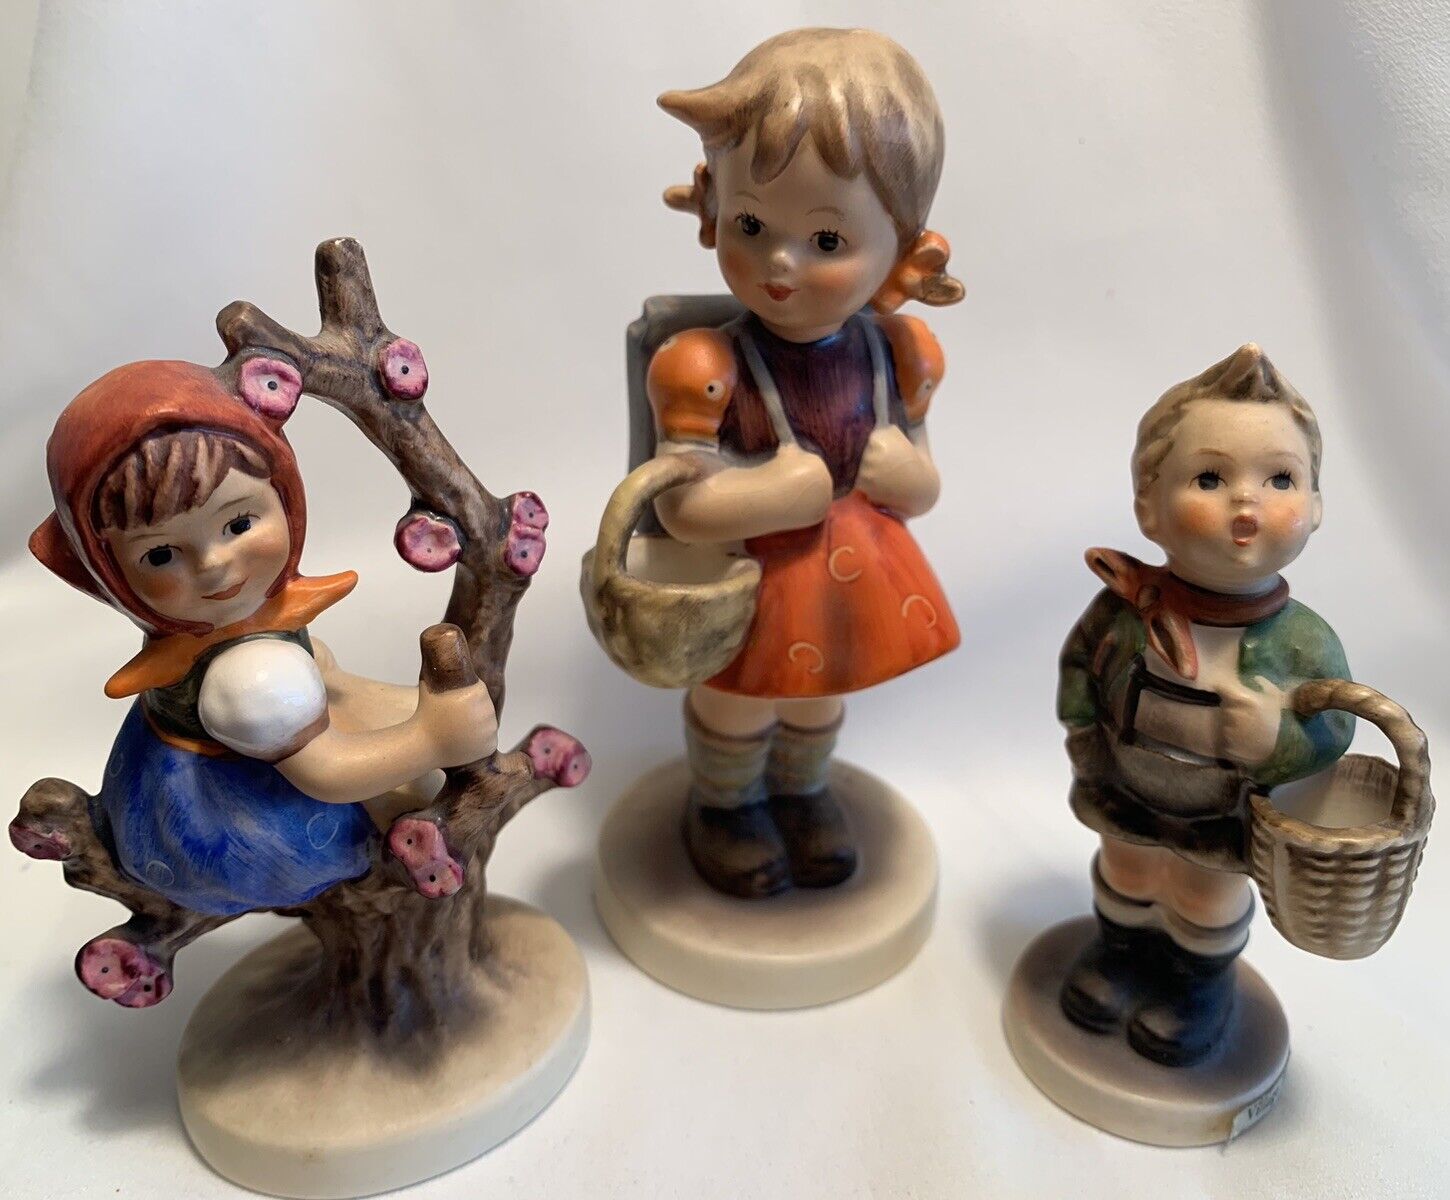 Lot of 3 Vintage Goebel Hummel W. Germany Collectible Figurines 3” to 5”